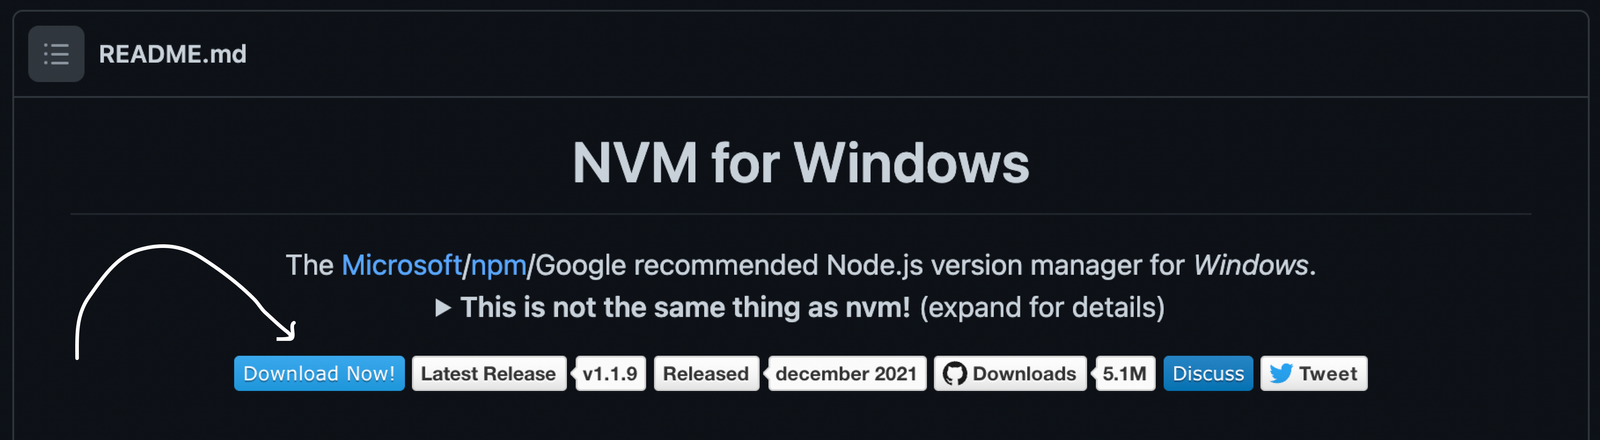 windows install nvm